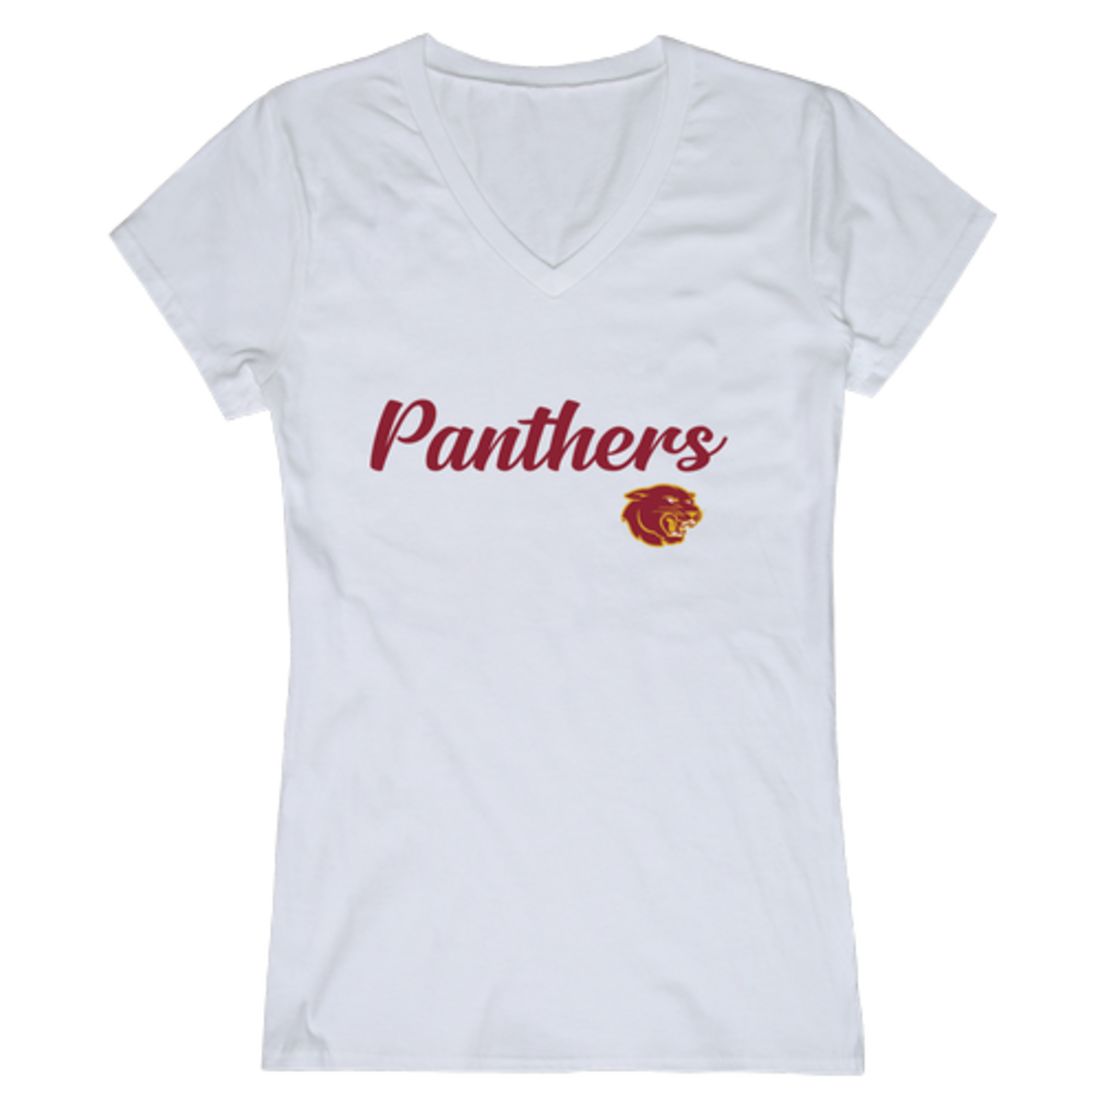 Sacramento City College Panthers Womens Script T-Shirt Tee